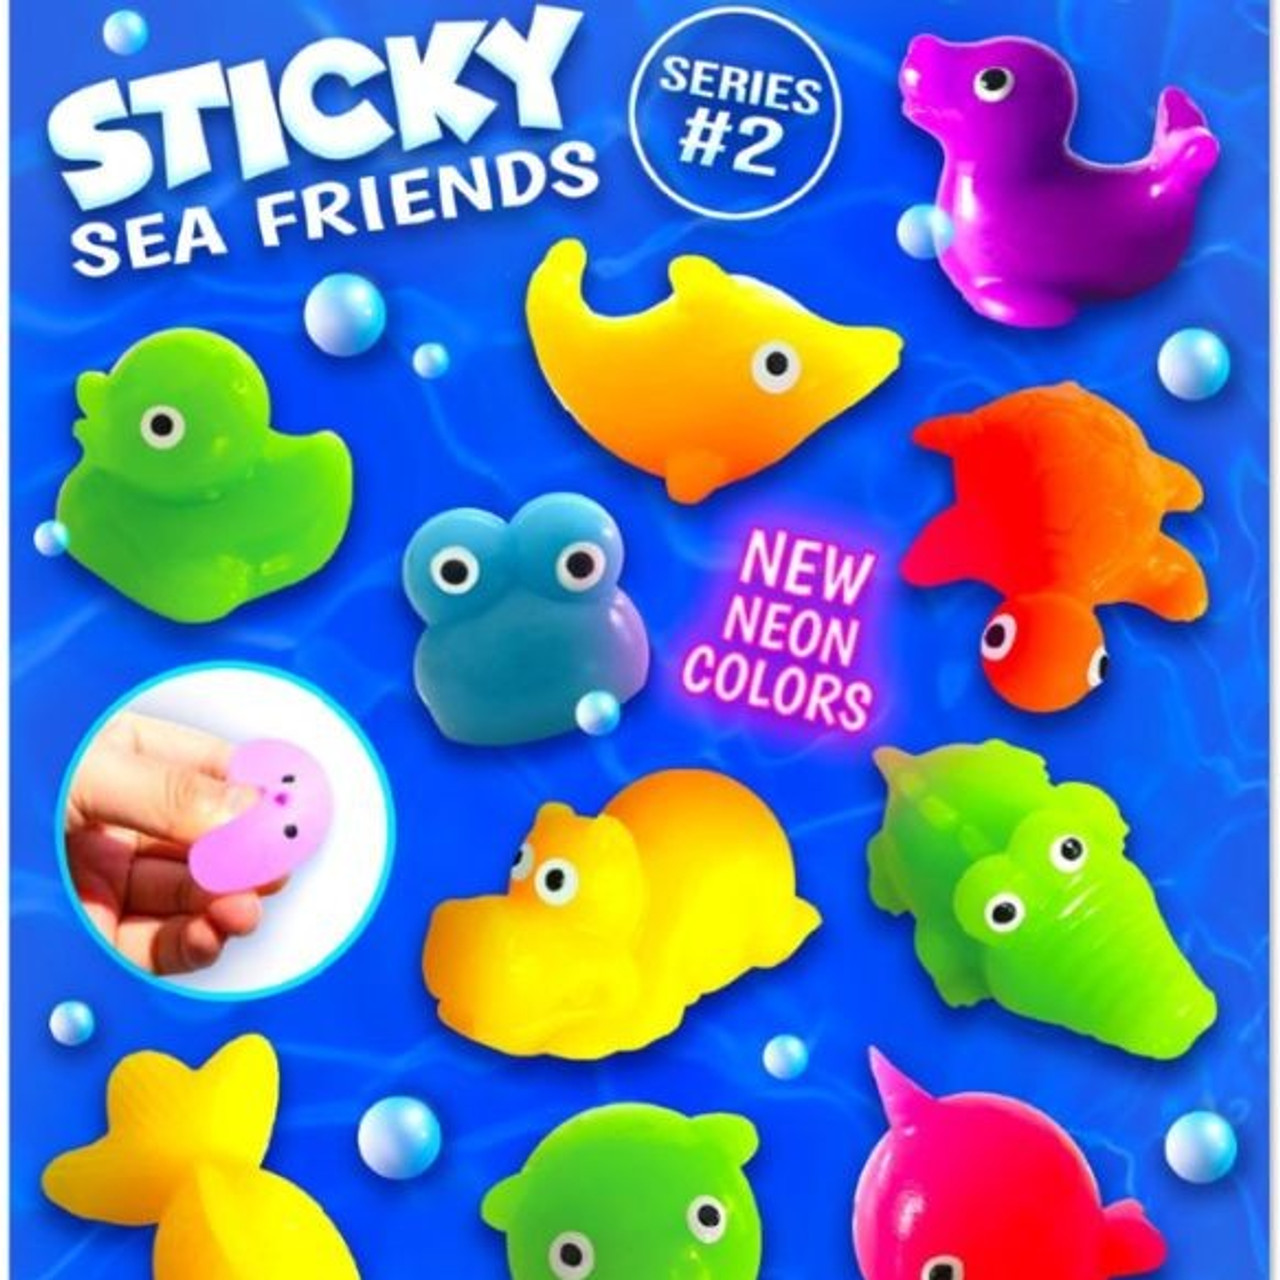 Friendly Sea Stickies 2Capsules